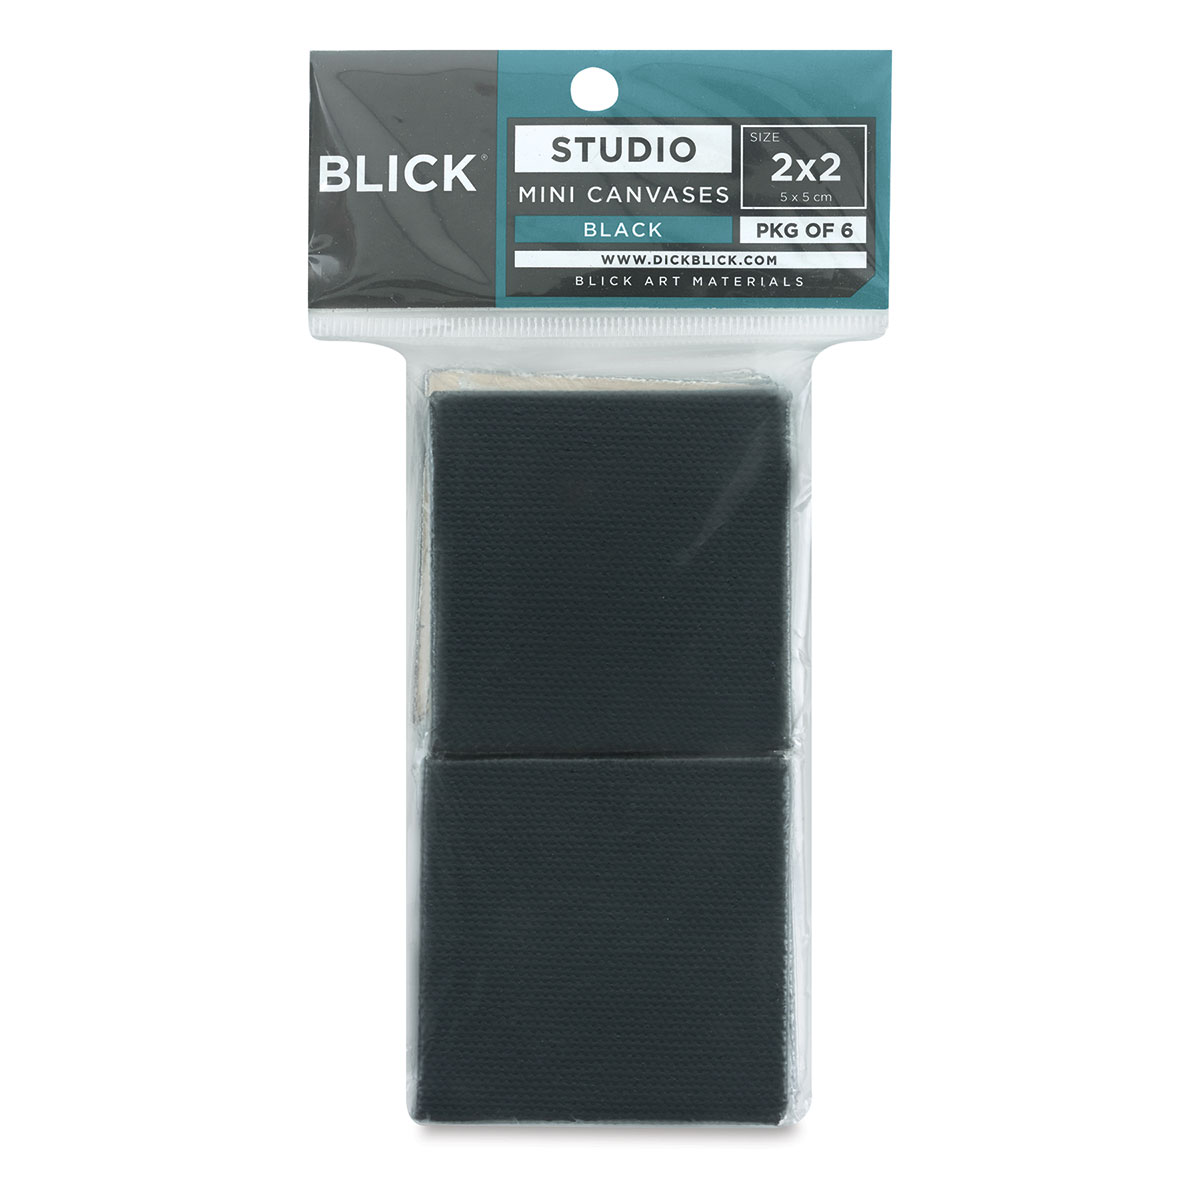 Blick Studio Mini Cotton Canvas - 2 x 2, Black, Pkg of 6